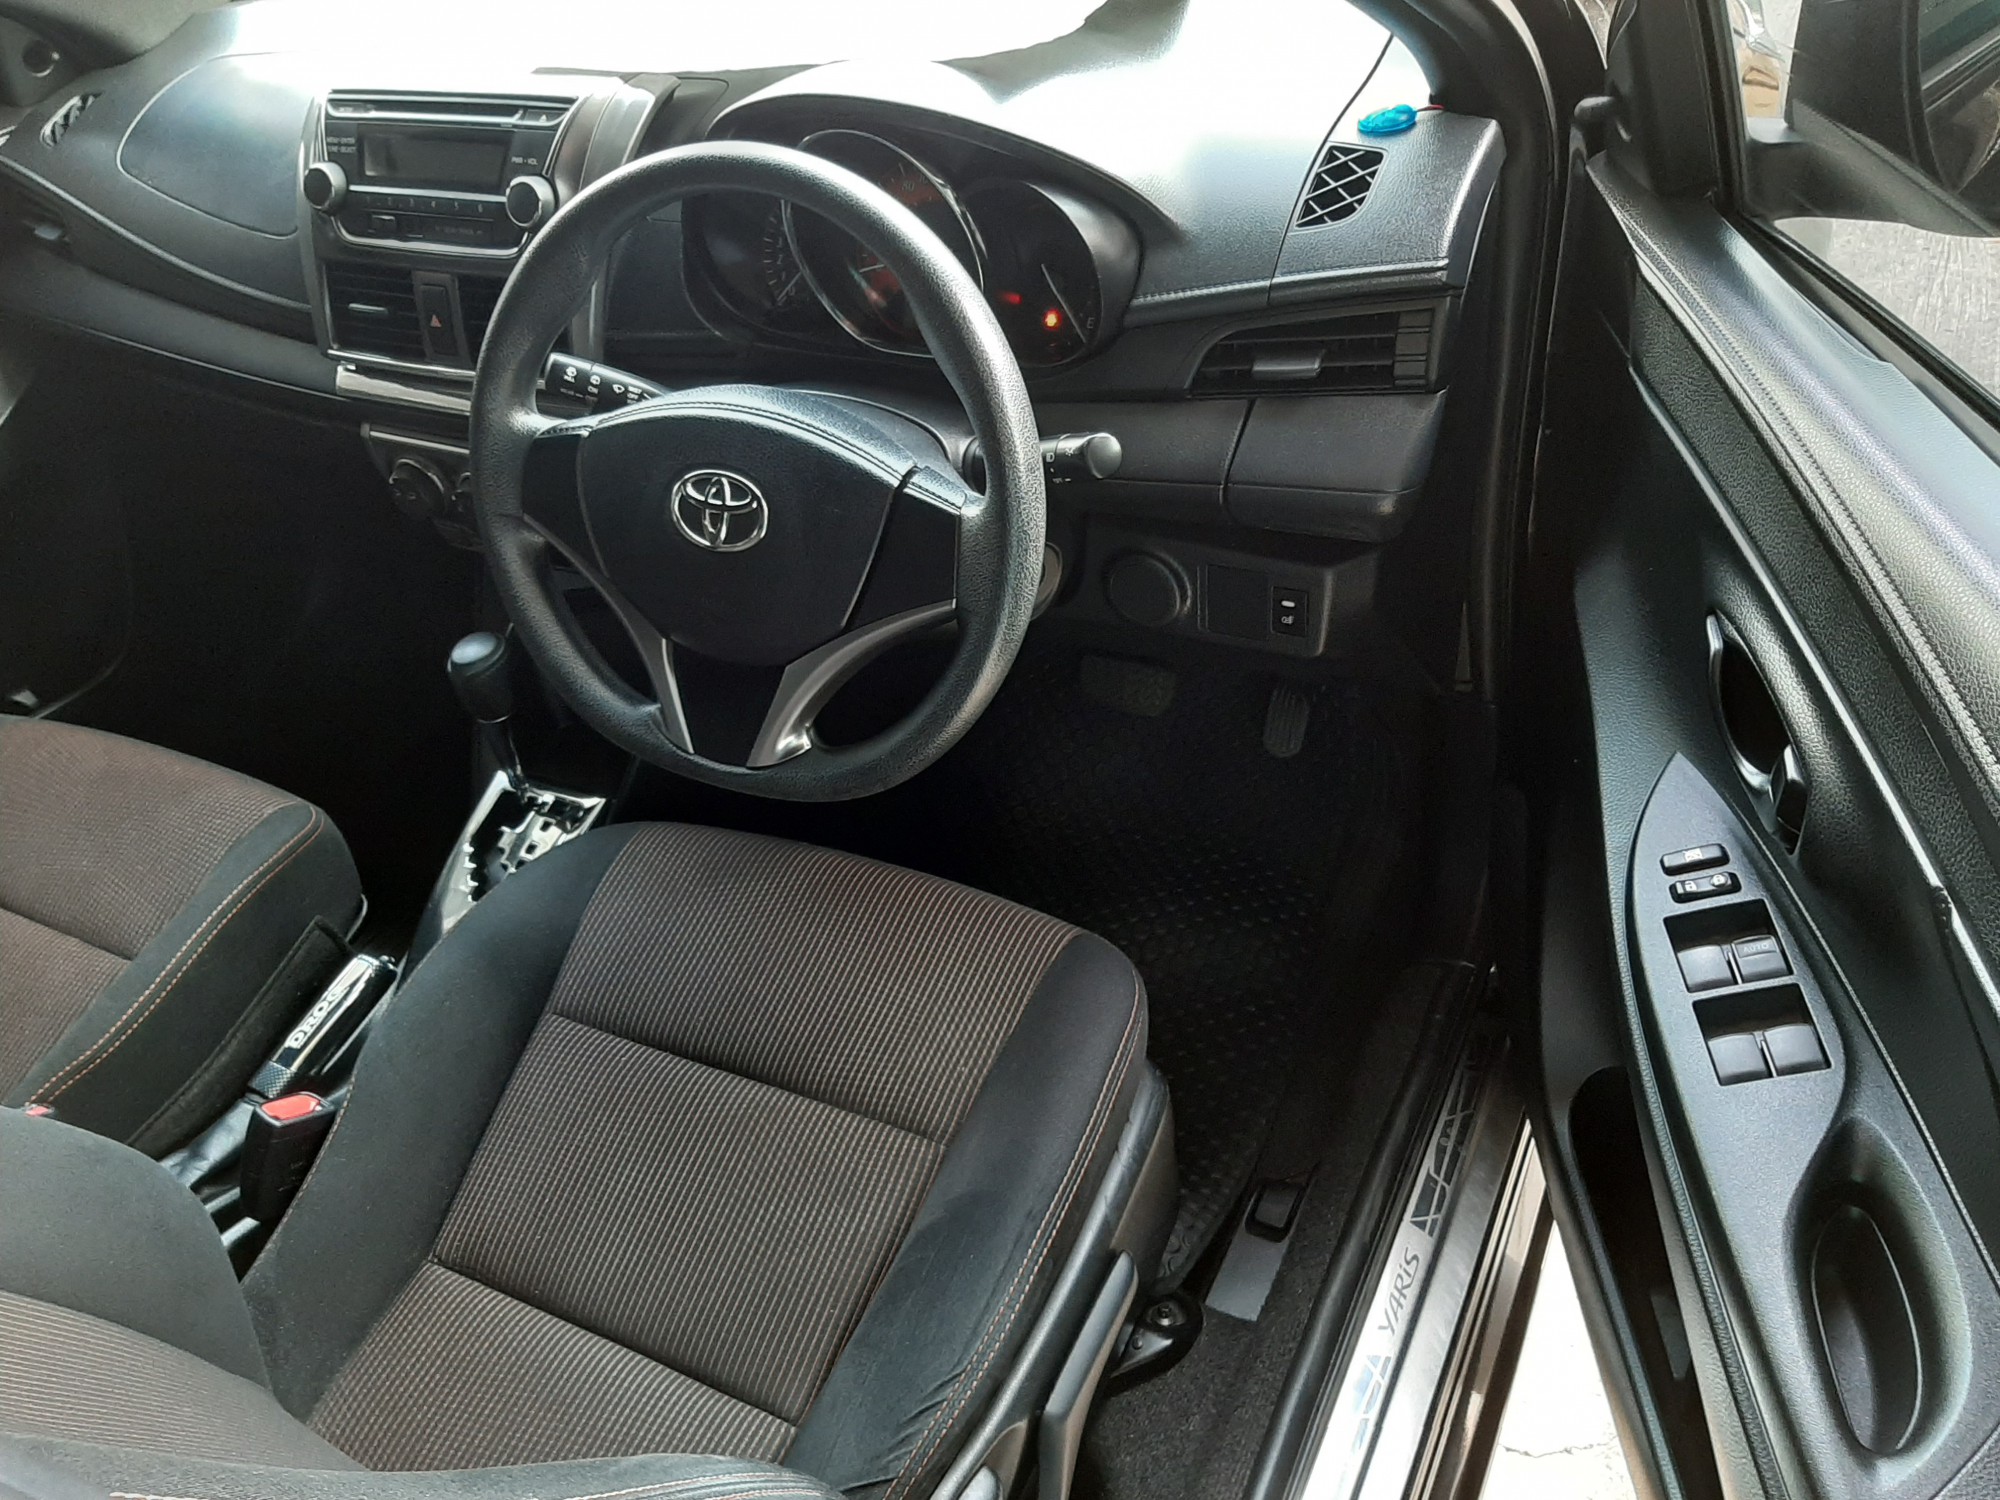 Toyota Yaris ปี 2013 สีดำ